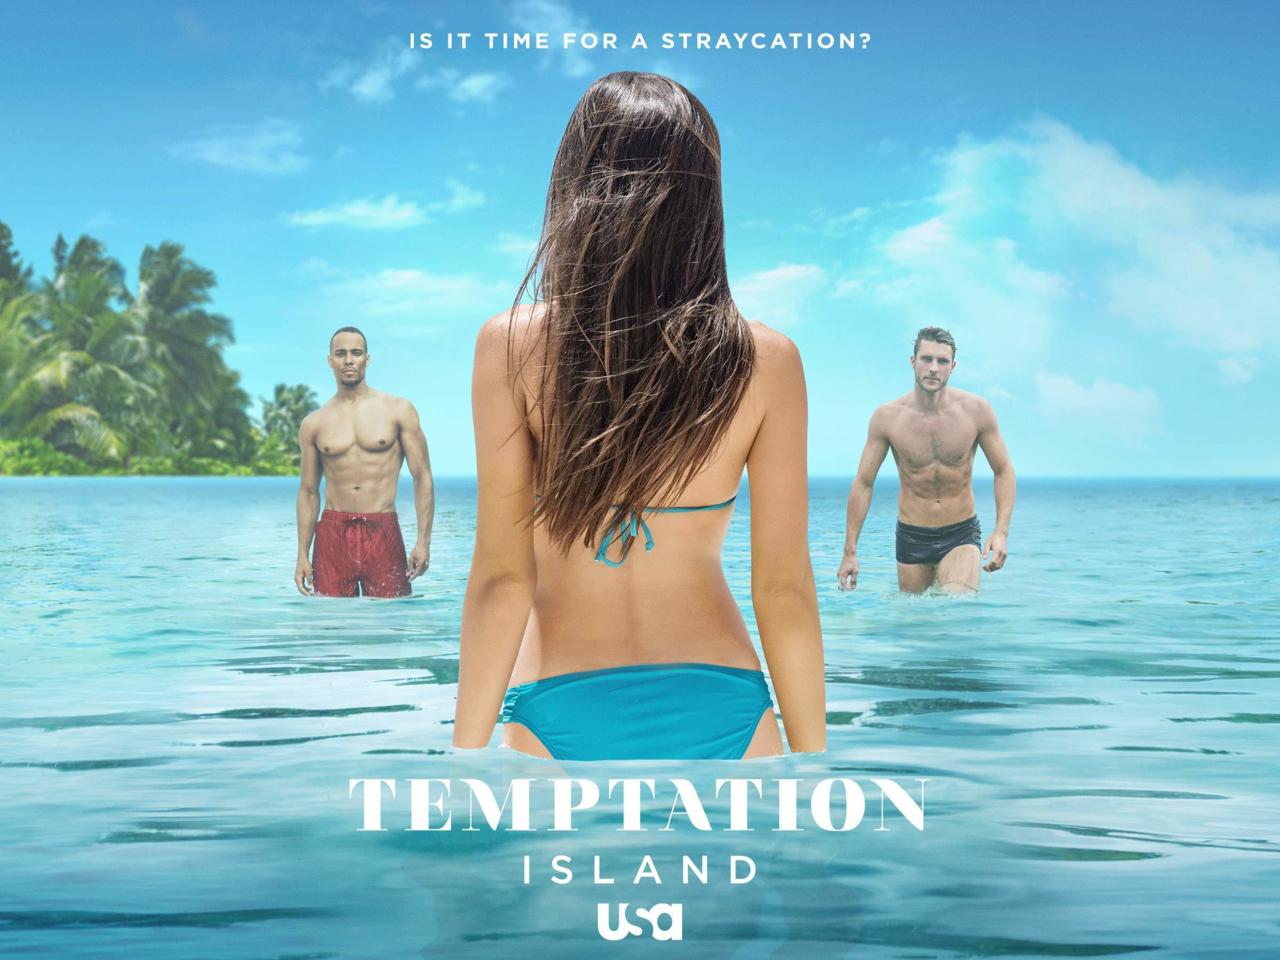 23. Temptation Island